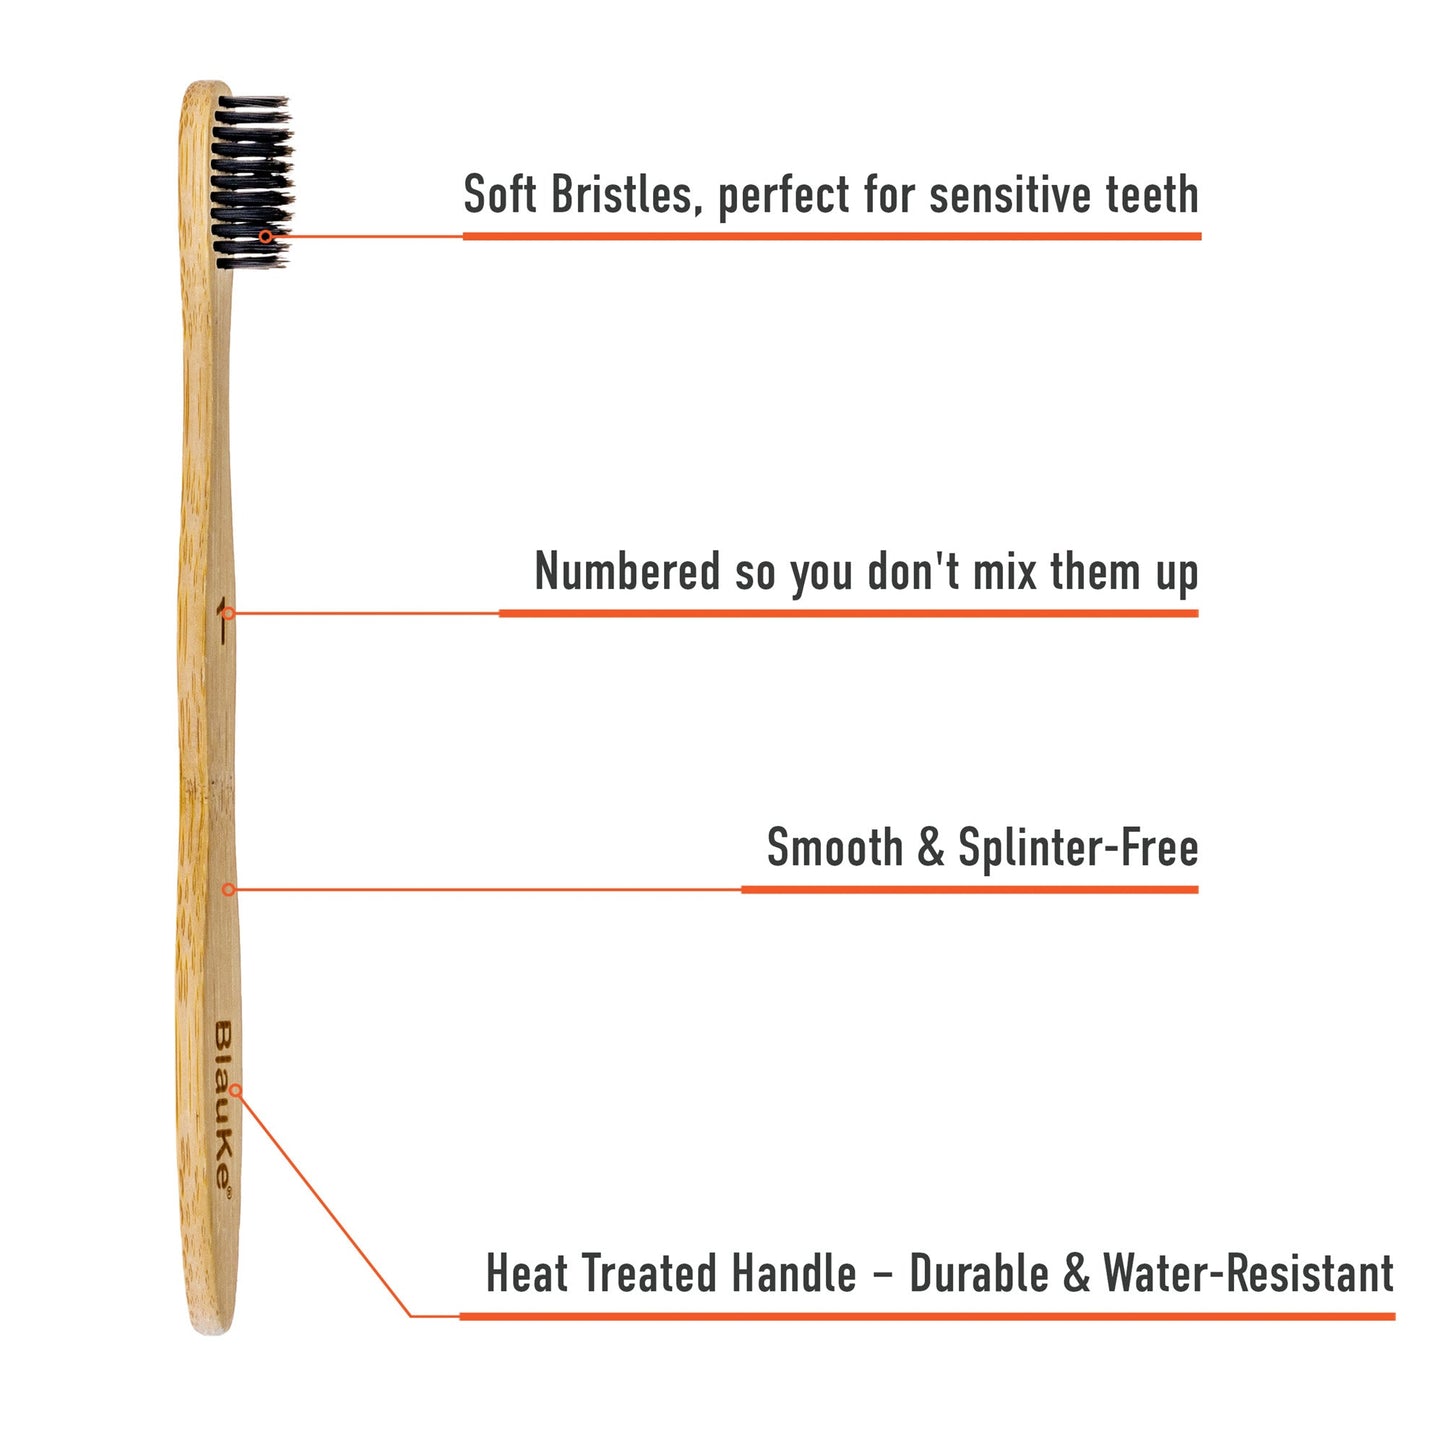 Bamboo Toothbrush Set 4-Pack - Bamboo Toothbrushes with Soft Bristles - Saltwater Bodega